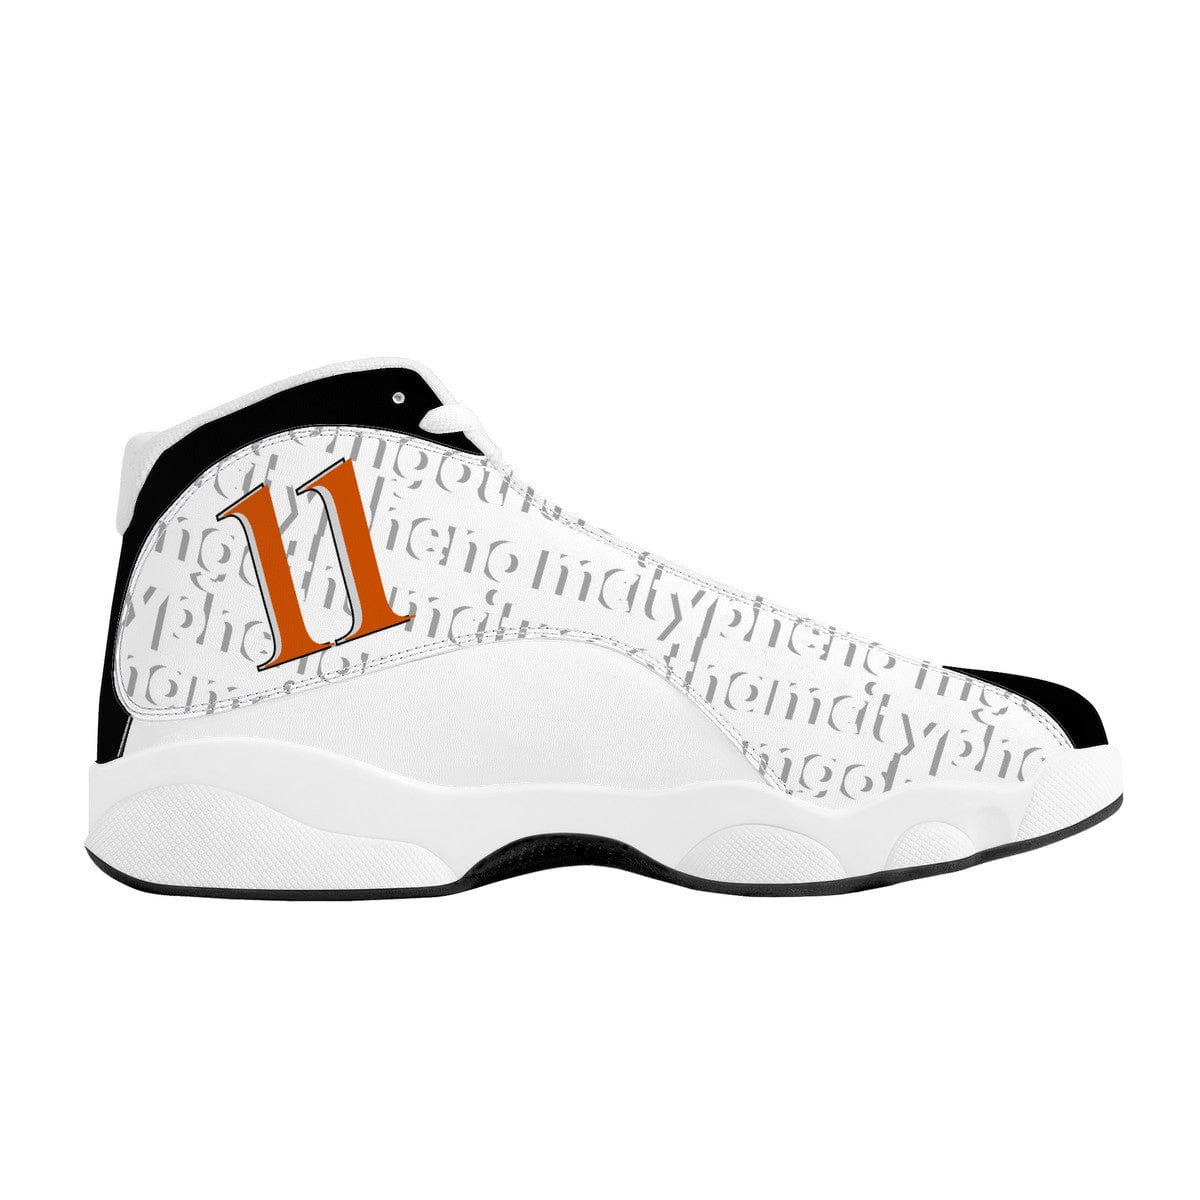 basketball shoes Gotham City phenomenon white basketball shoes